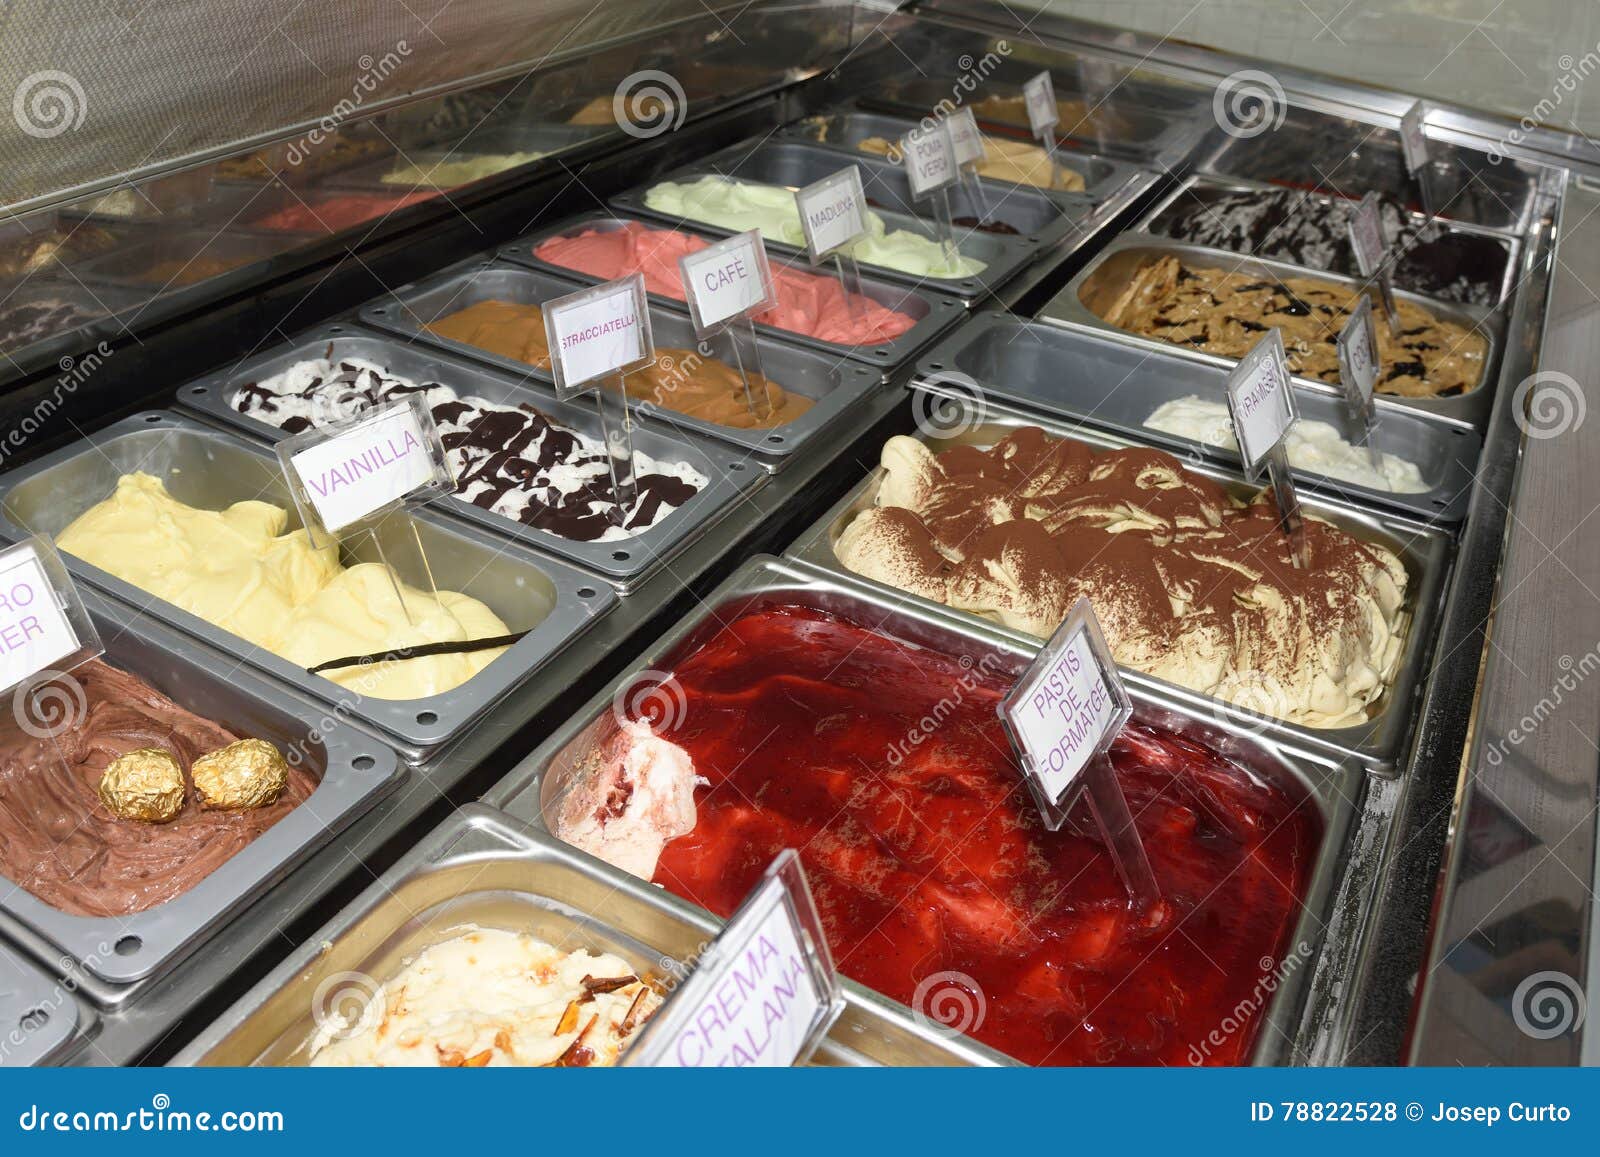 ice cream in an ice cream shop,